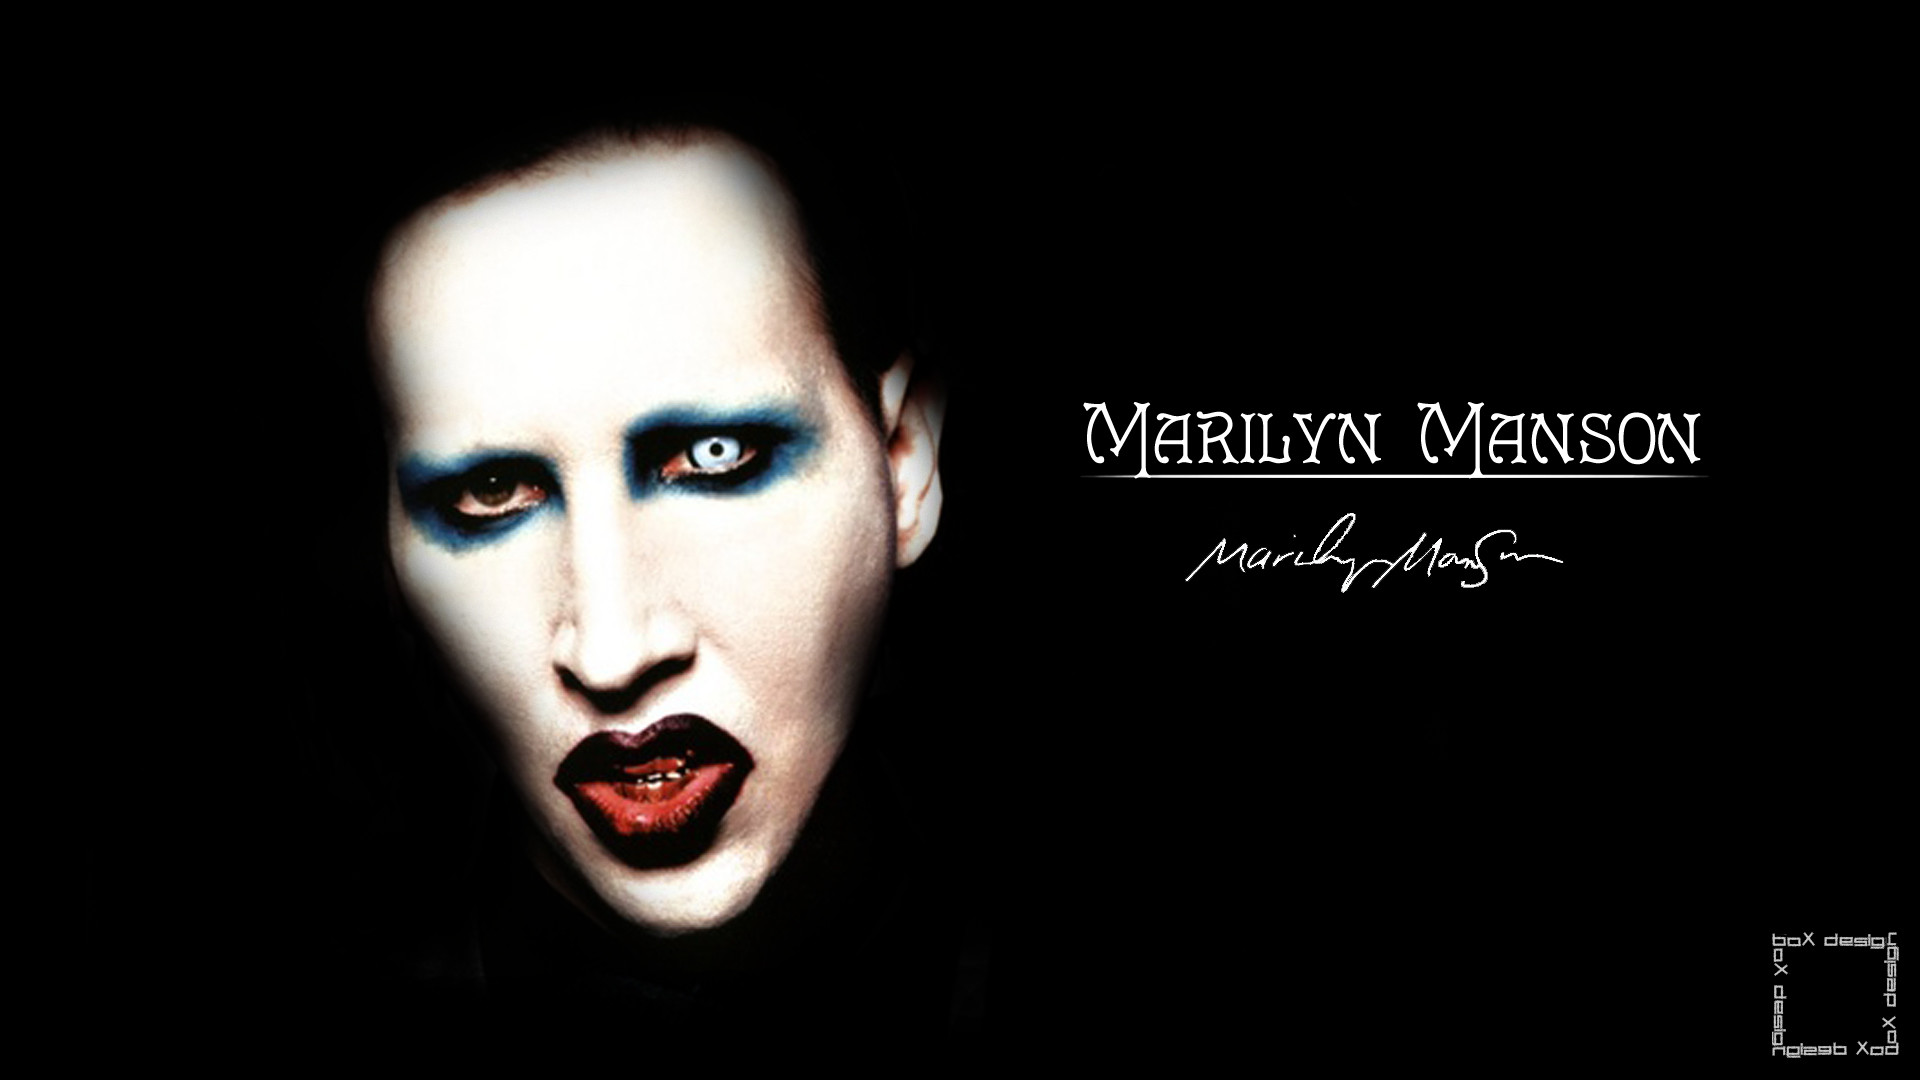 1920x1080 Marilyn Manson Wallpaper by boX1515 Marilyn Manson Wallpaper by boX1515